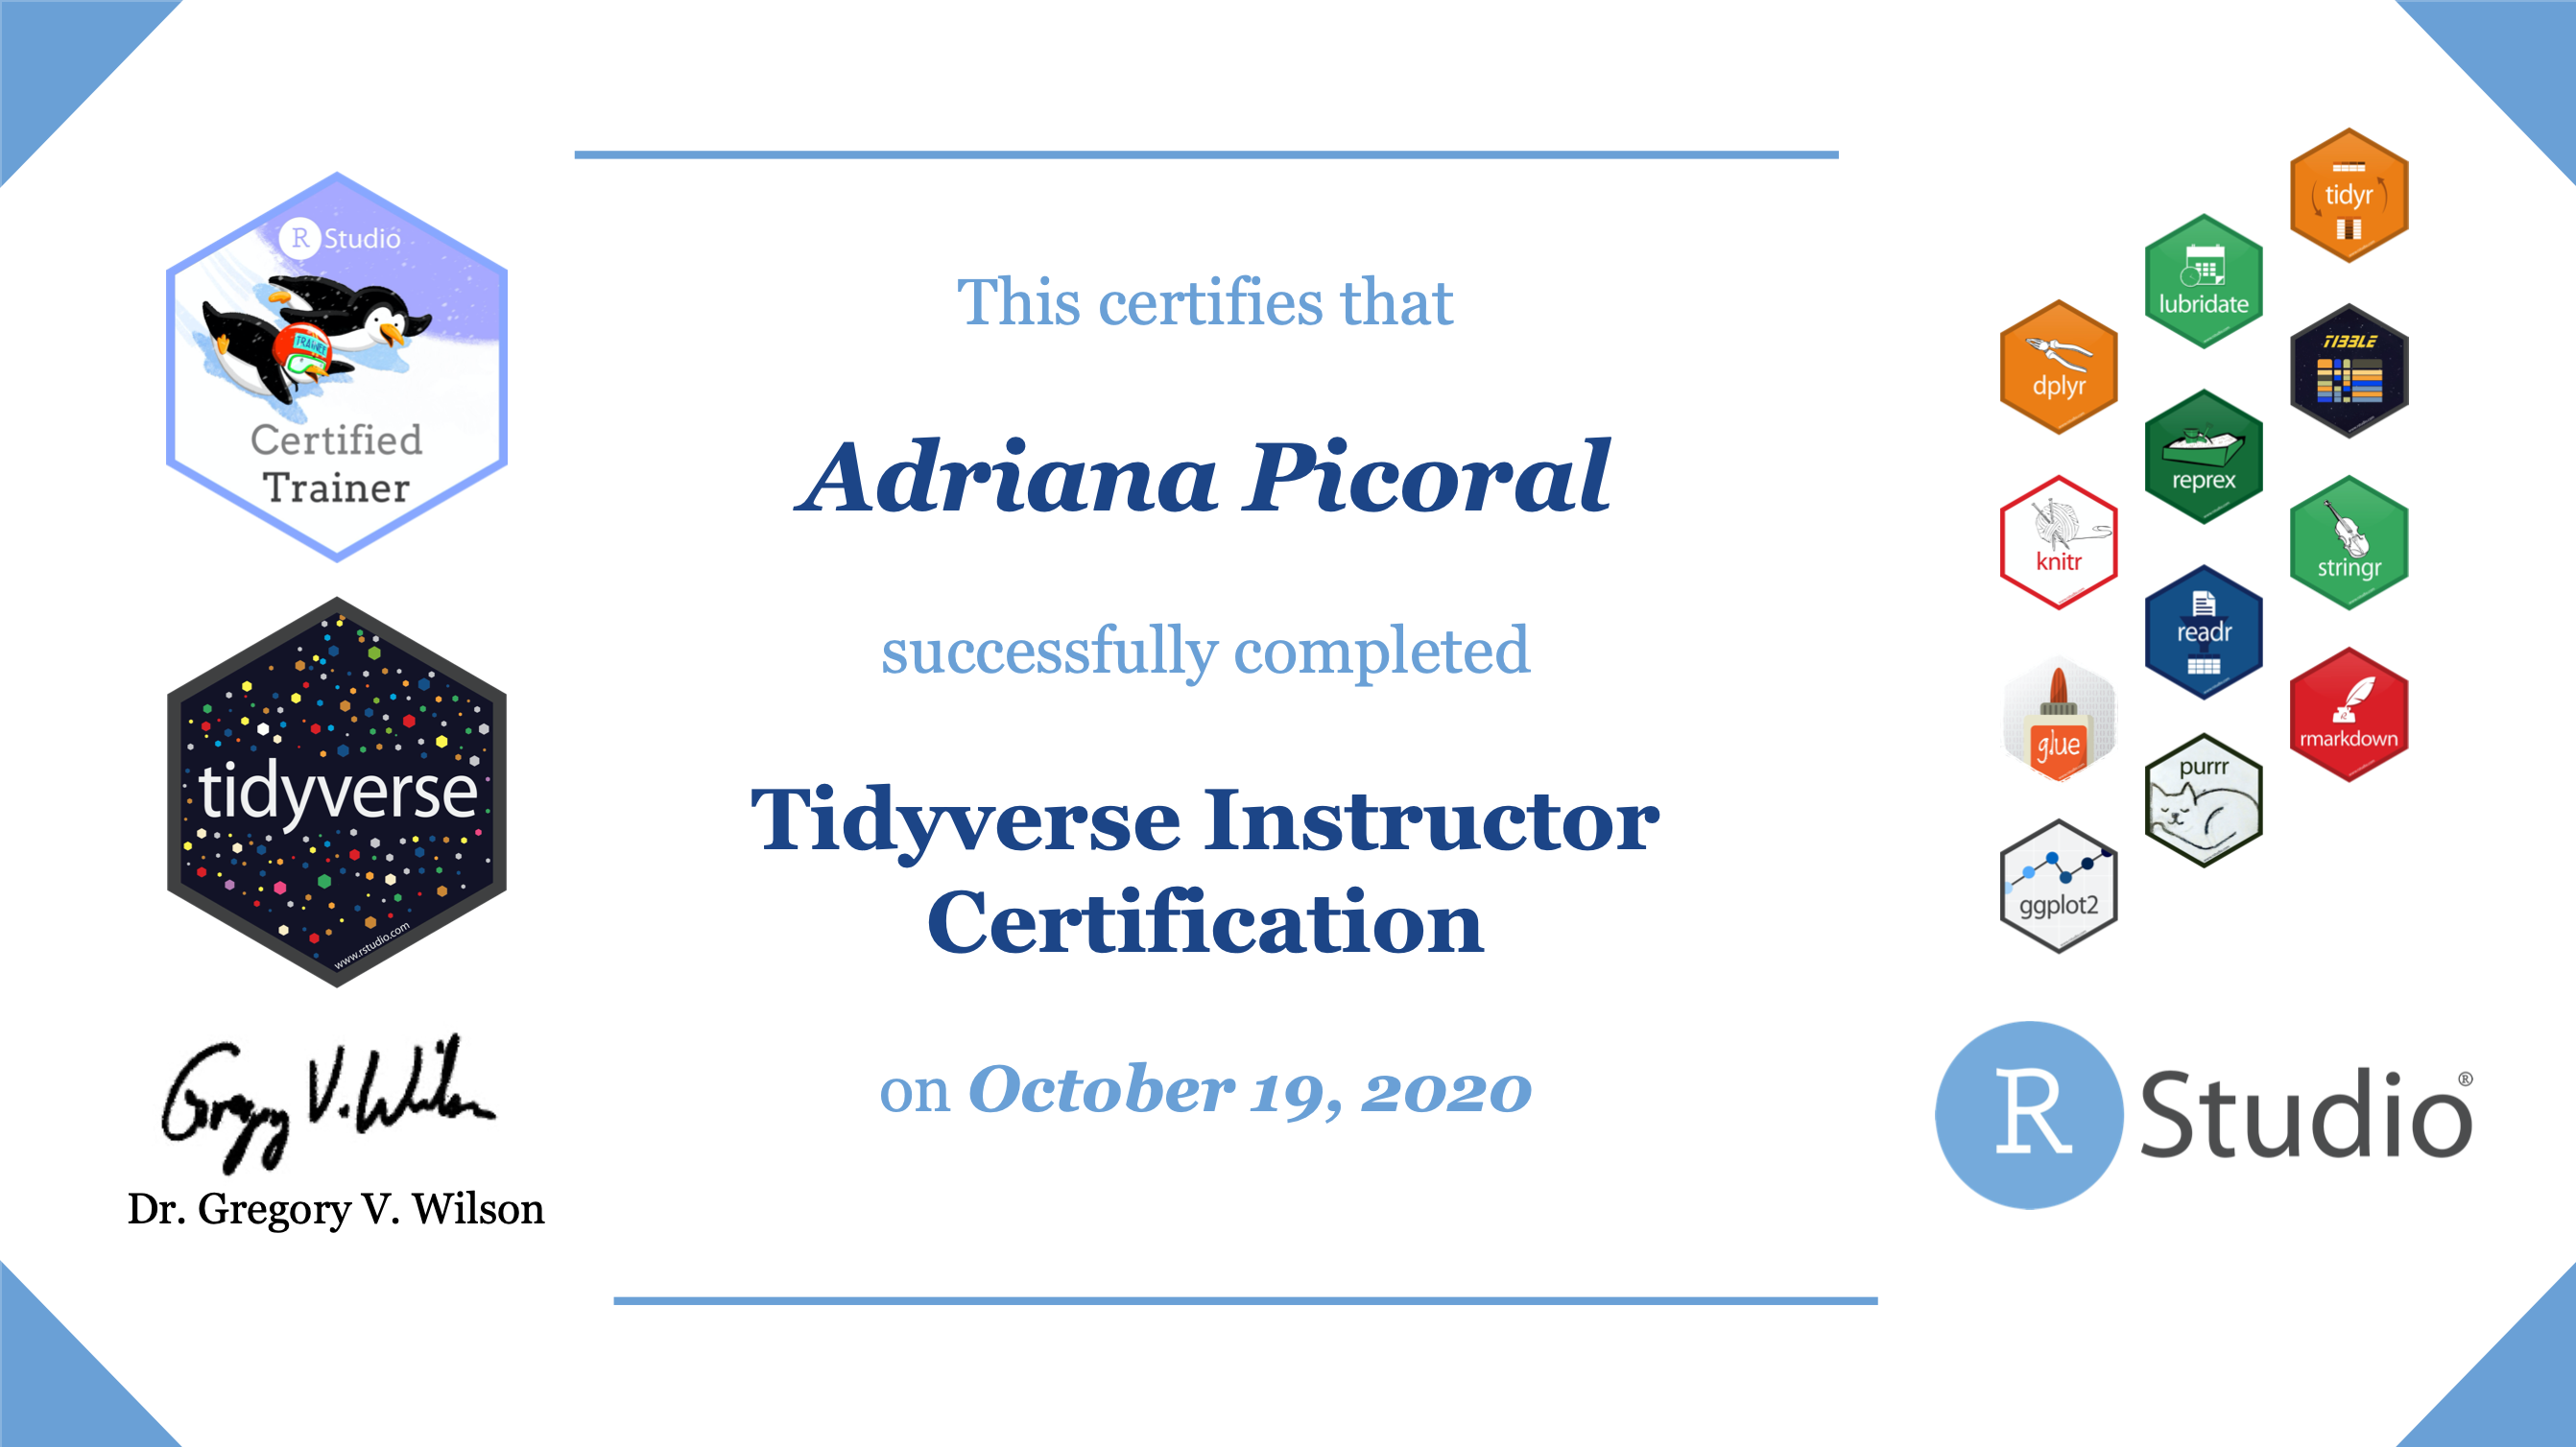 Tidyverse Instructor Certification